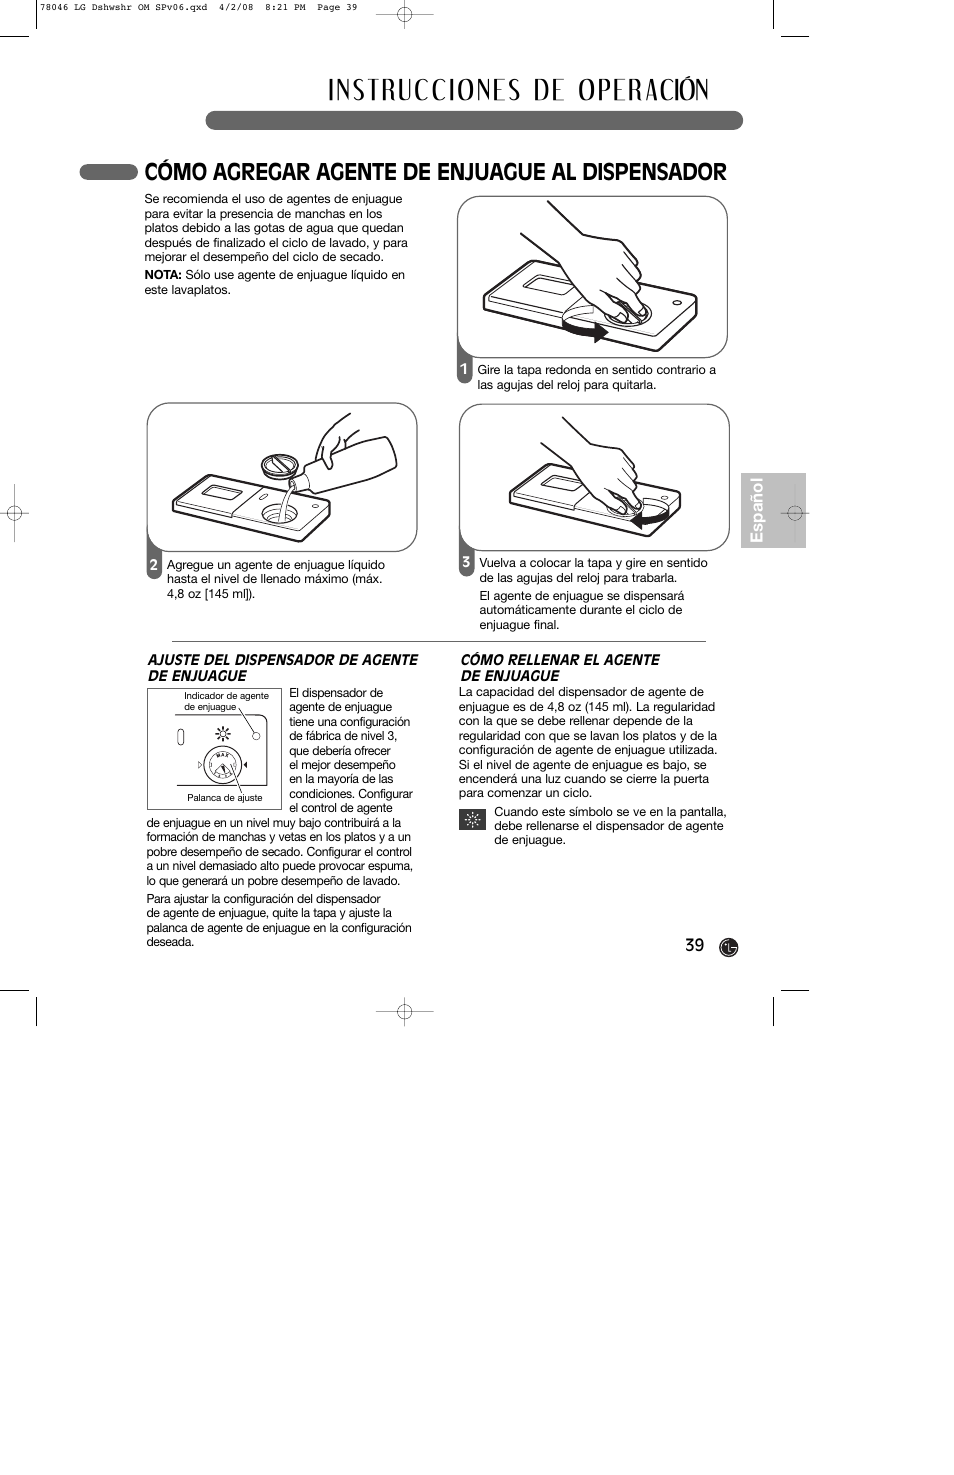 Cómo agregar agente de enjuague al dispensador | LG LDS4821ST User Manual | Page 39 / 68